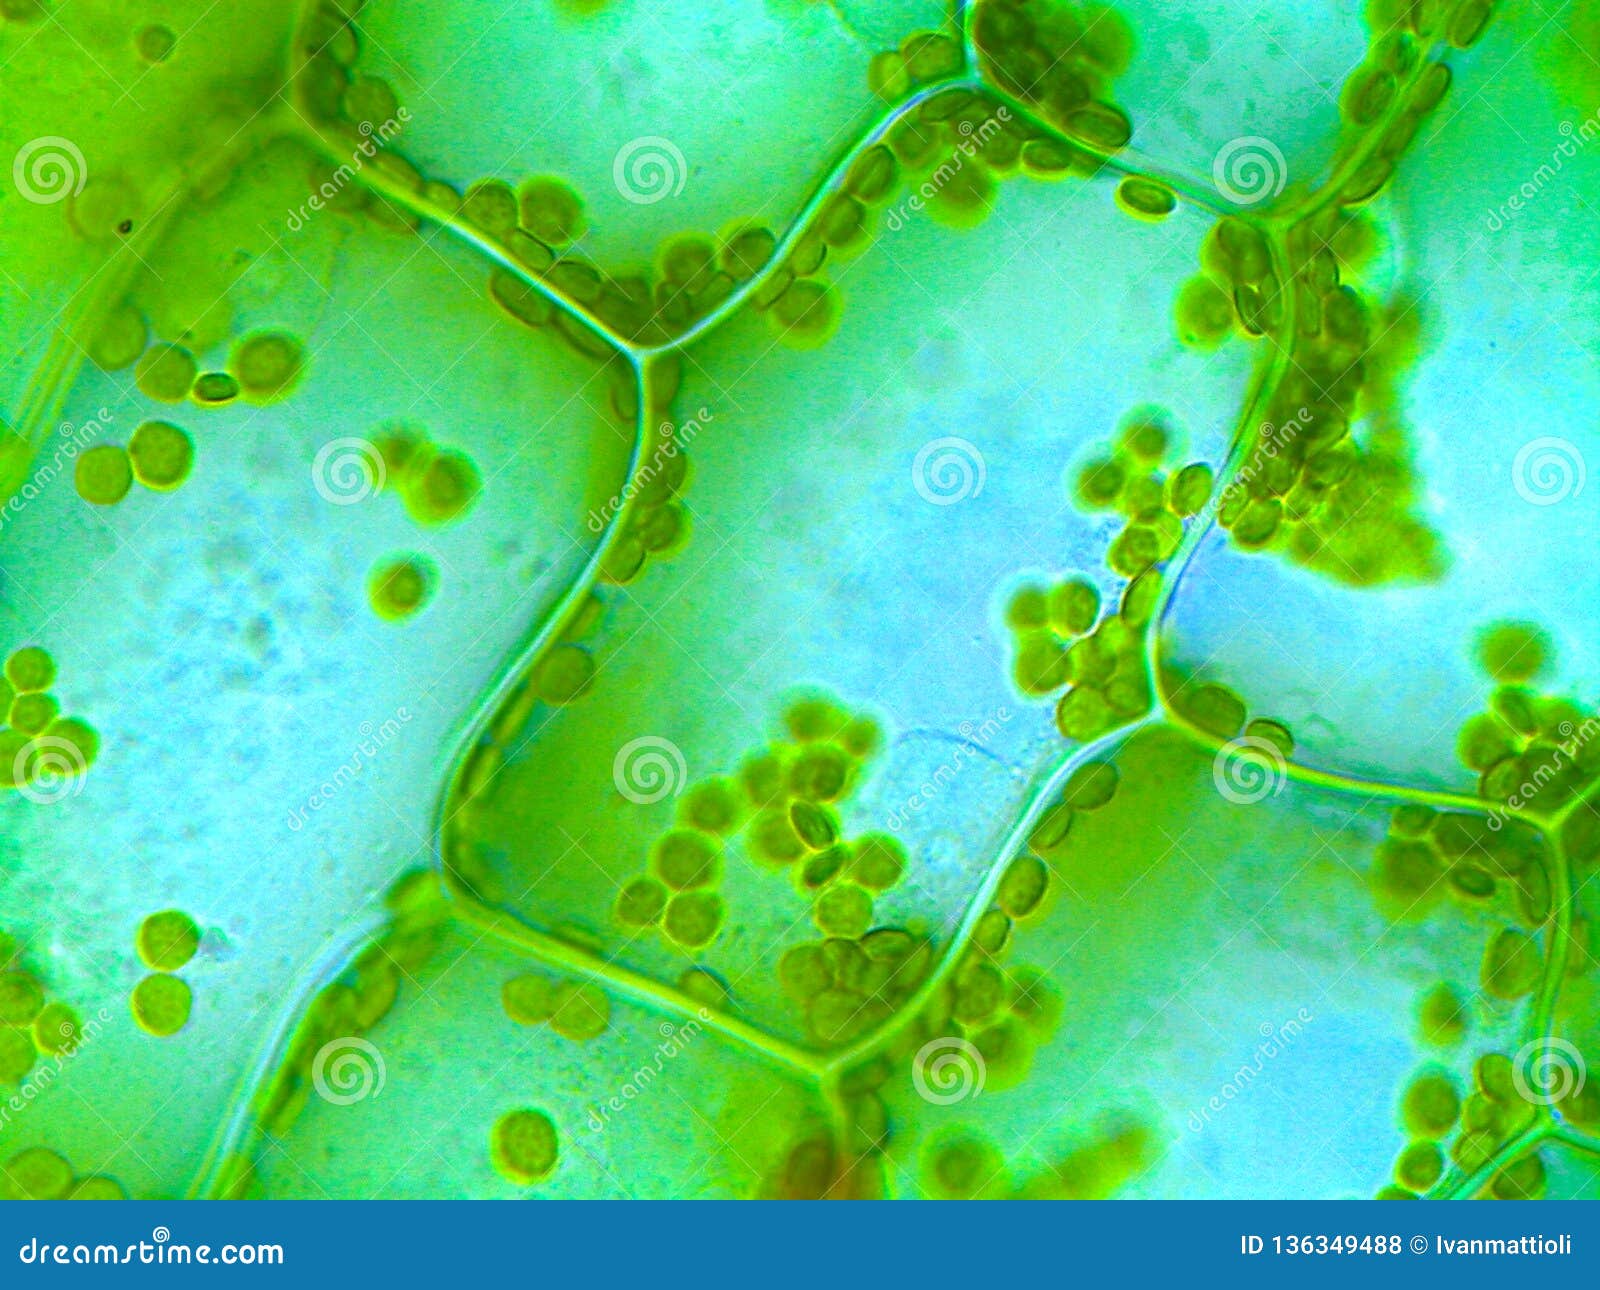 elodea water plant under microscope